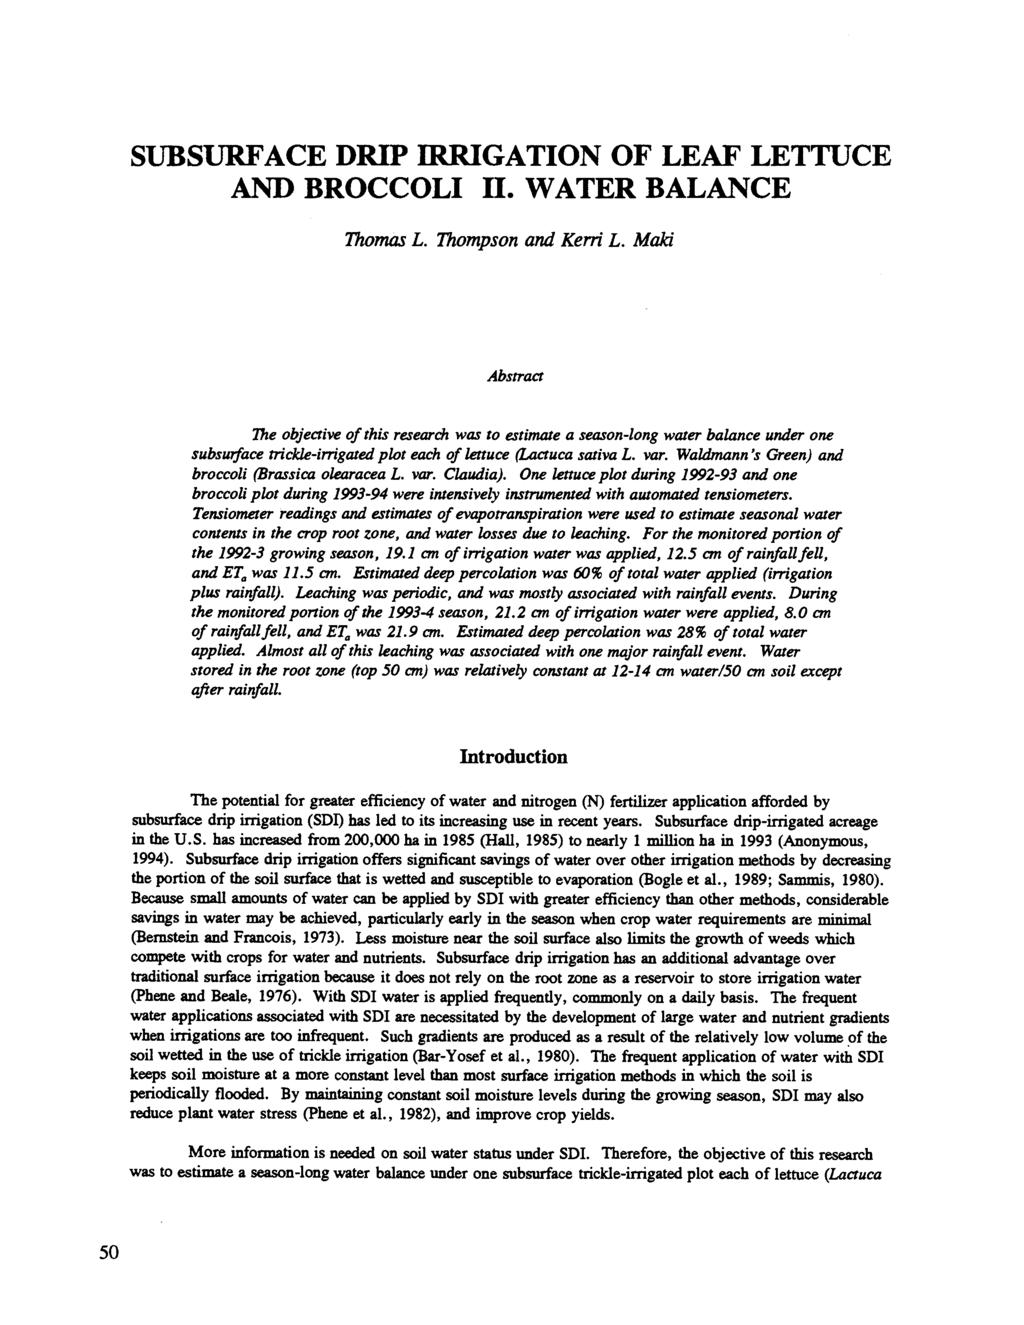 SUBSURFACE DRIP IRRIGATIO OF LEAF LETTUCE AD BROCCOLI II. WATER BALACE Thomas L. Thompson and Kepi L.